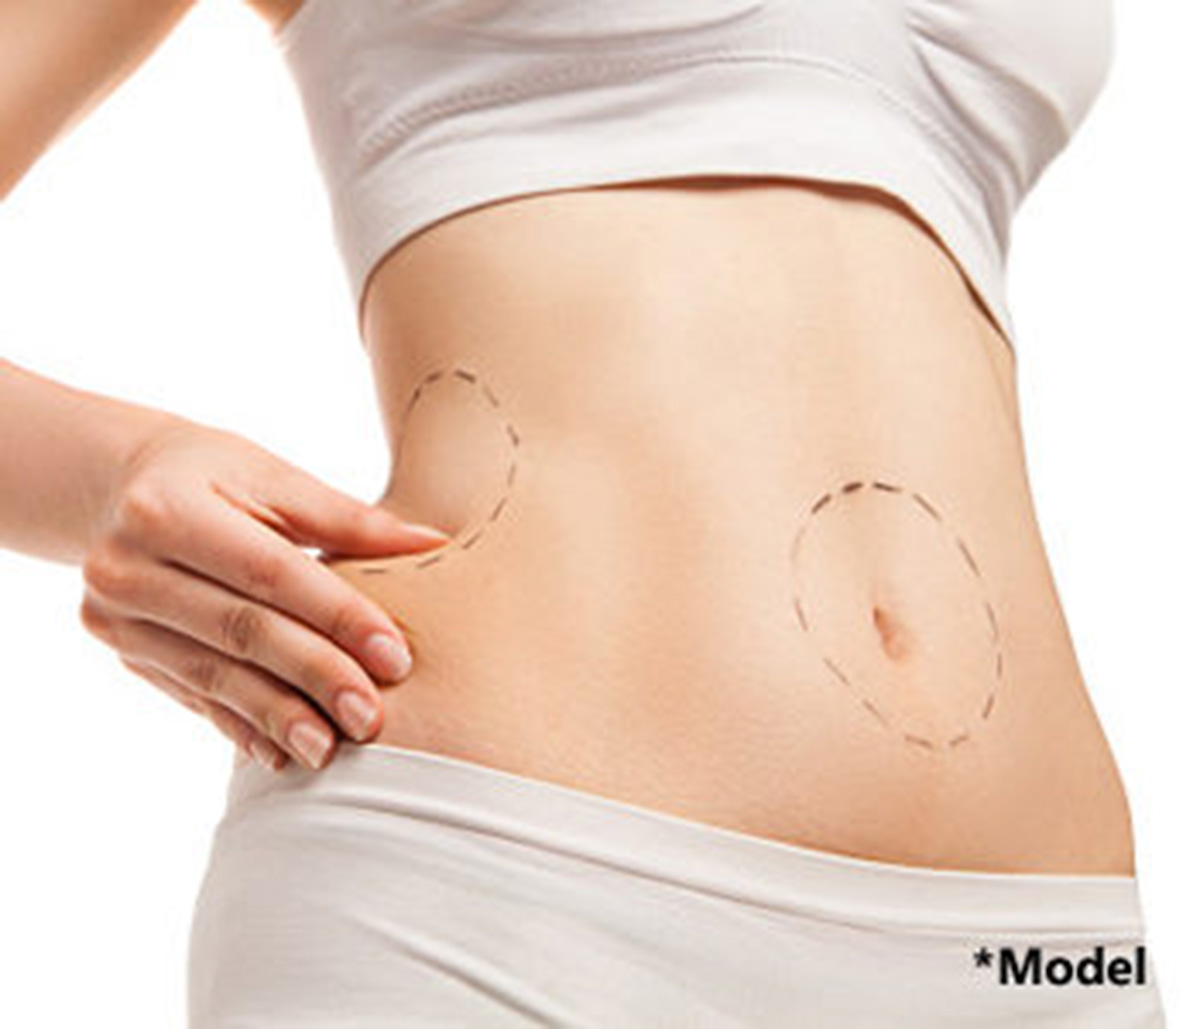 Tummy Tuck (Abdominoplasty) Procedure - Surgery & Recovery